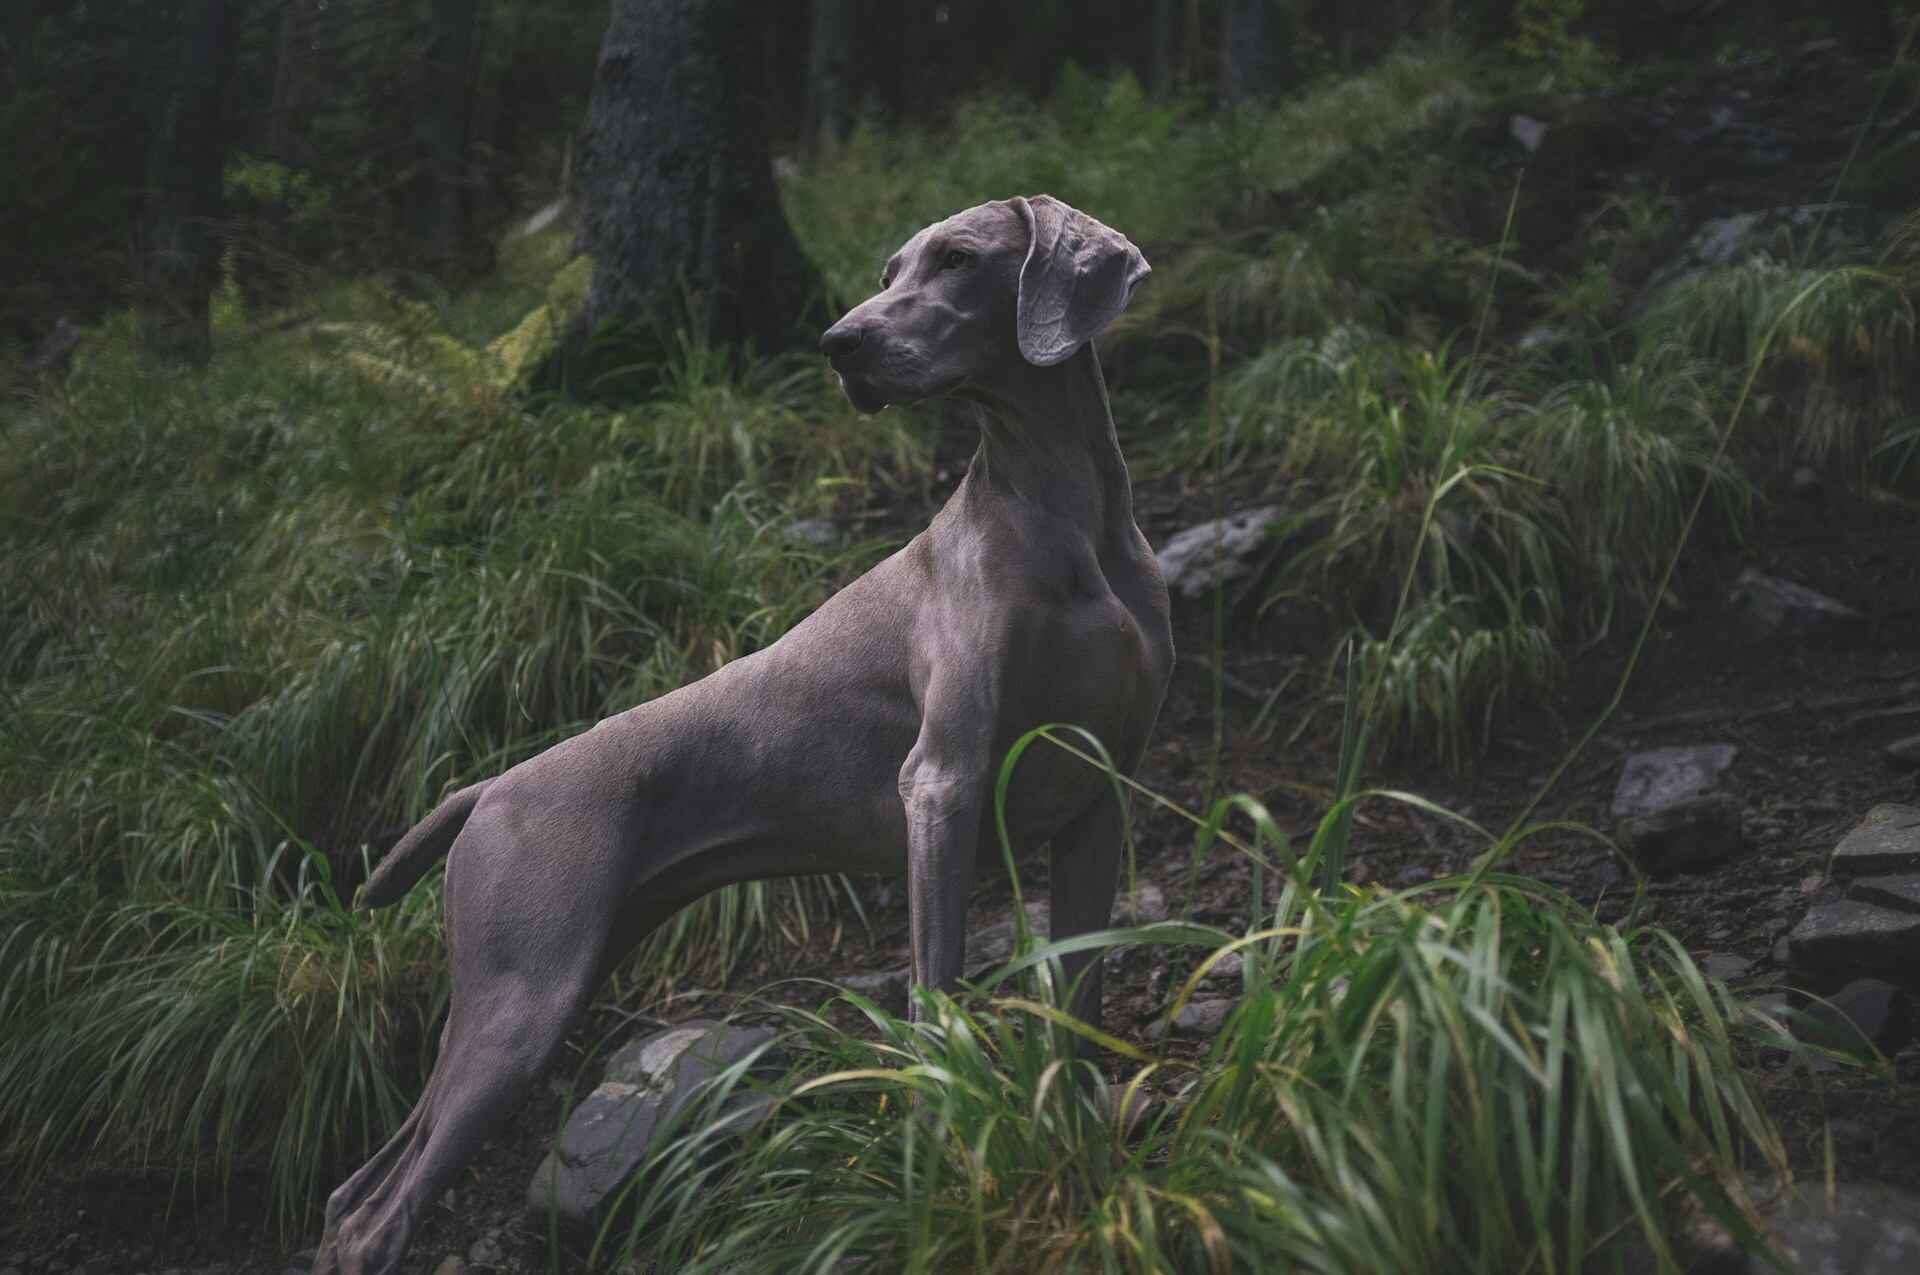 A Weimaraner dog standing in a forest